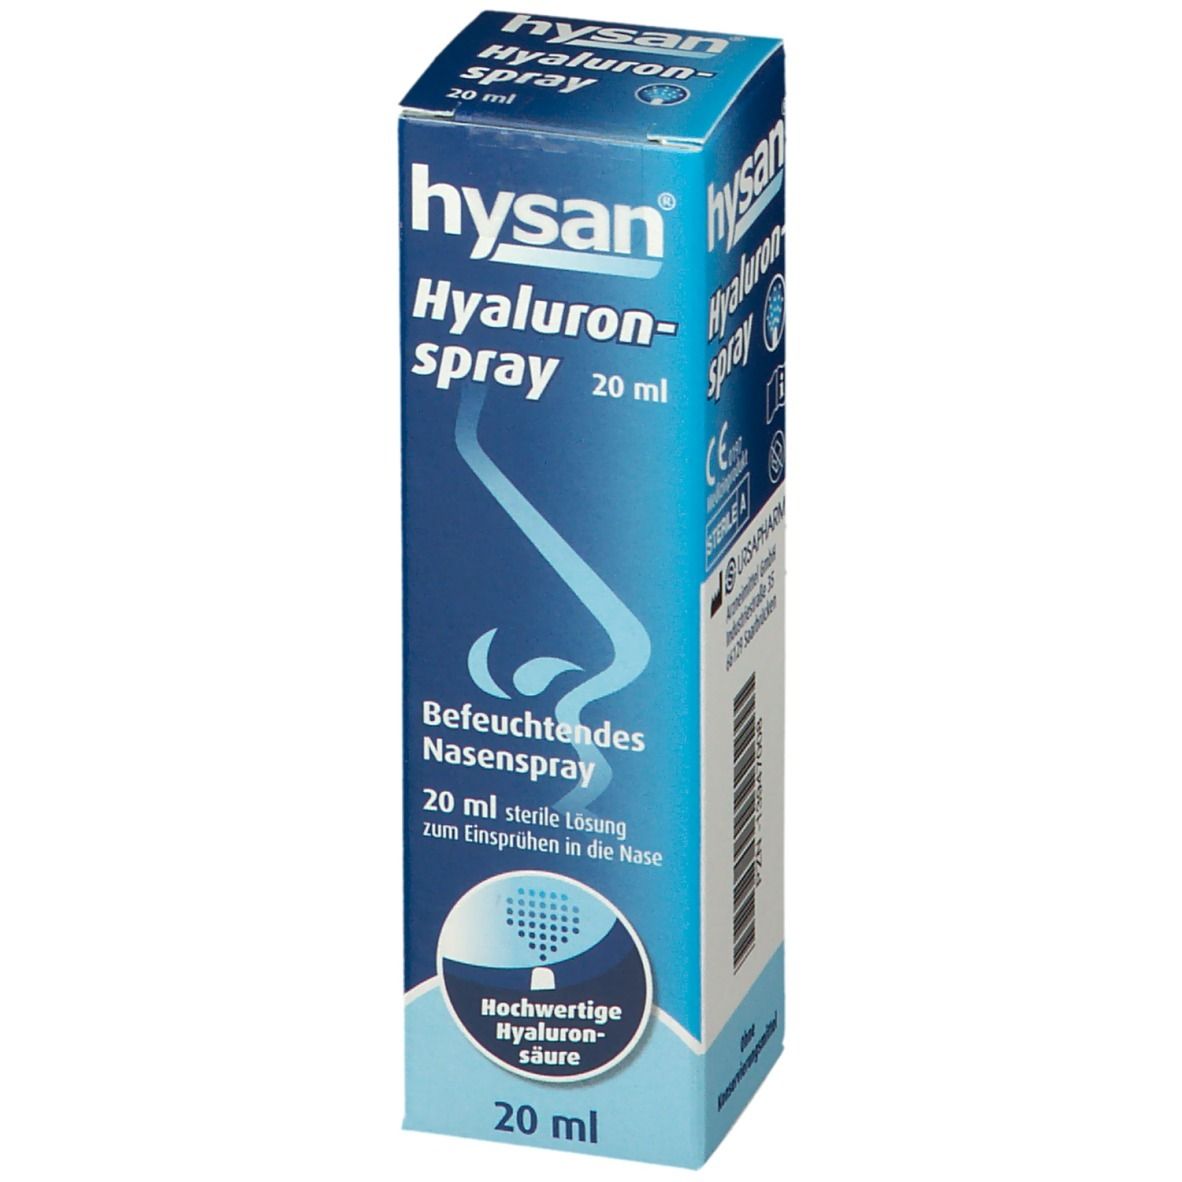 hysan® Hyaluronspray